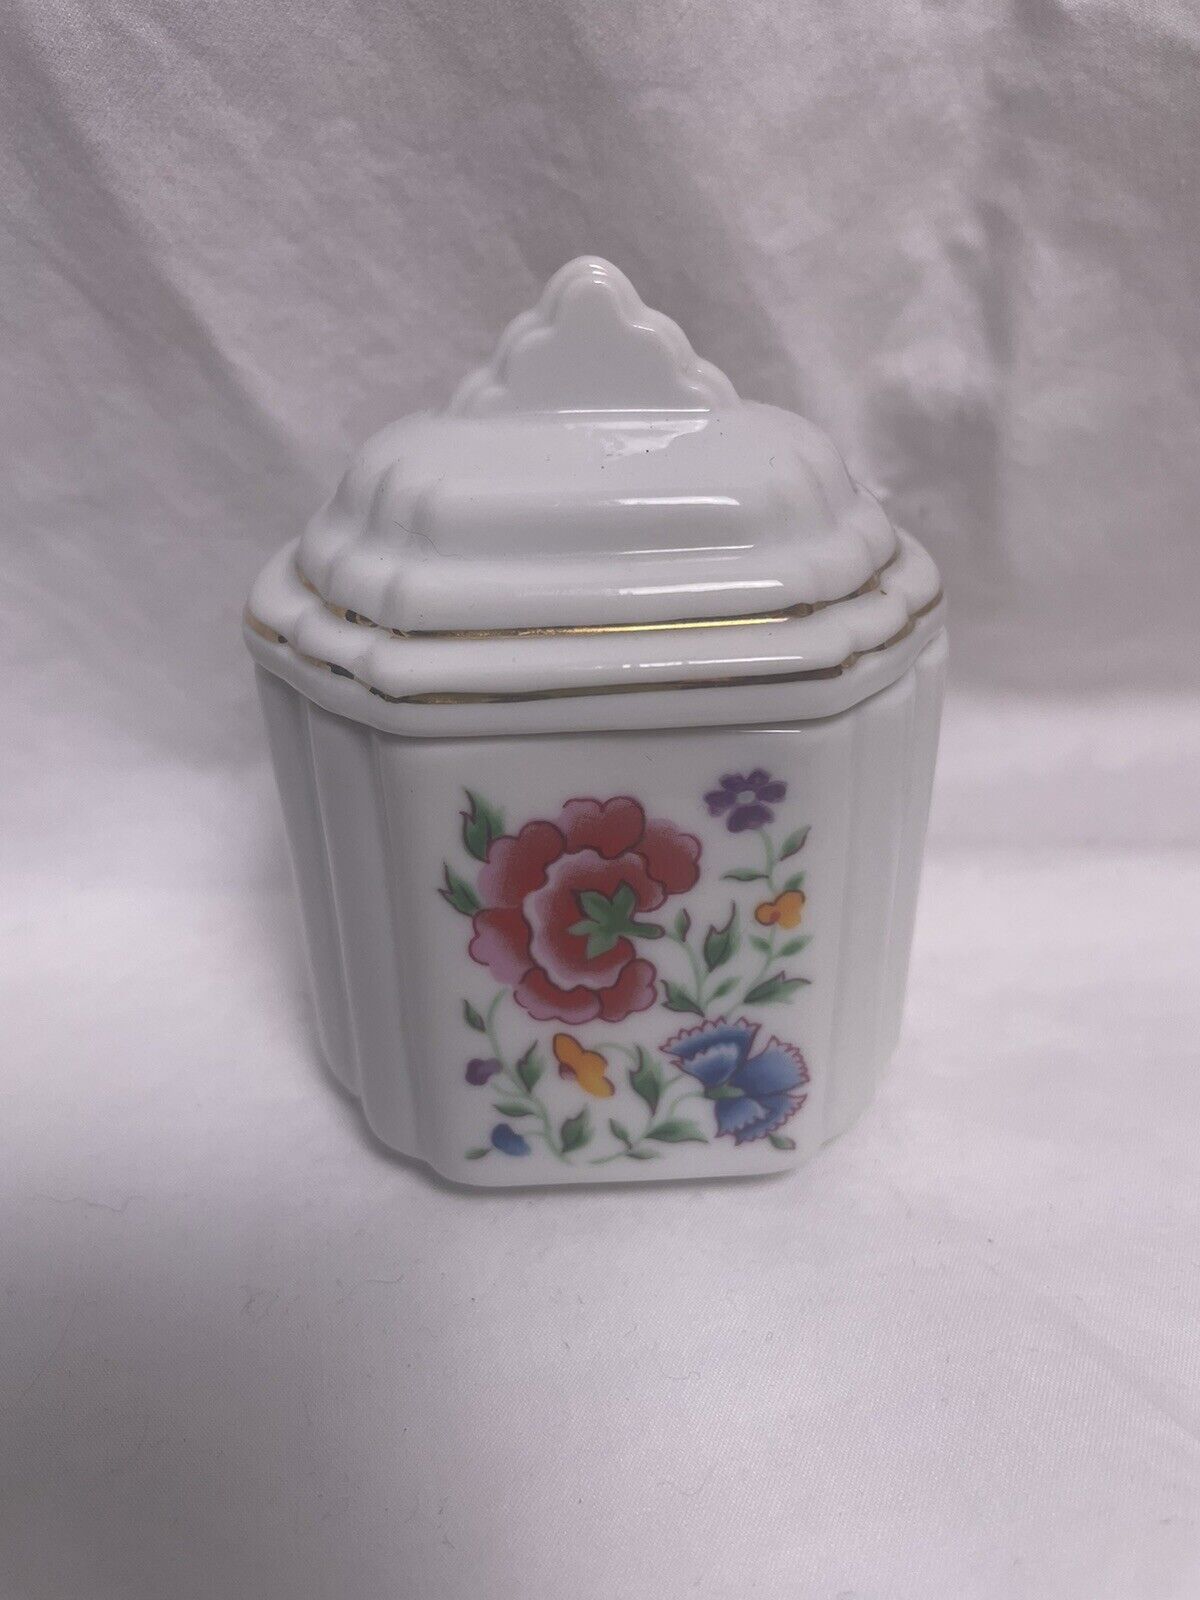 Vintage ceramic floral trinket box with lid made in Japan